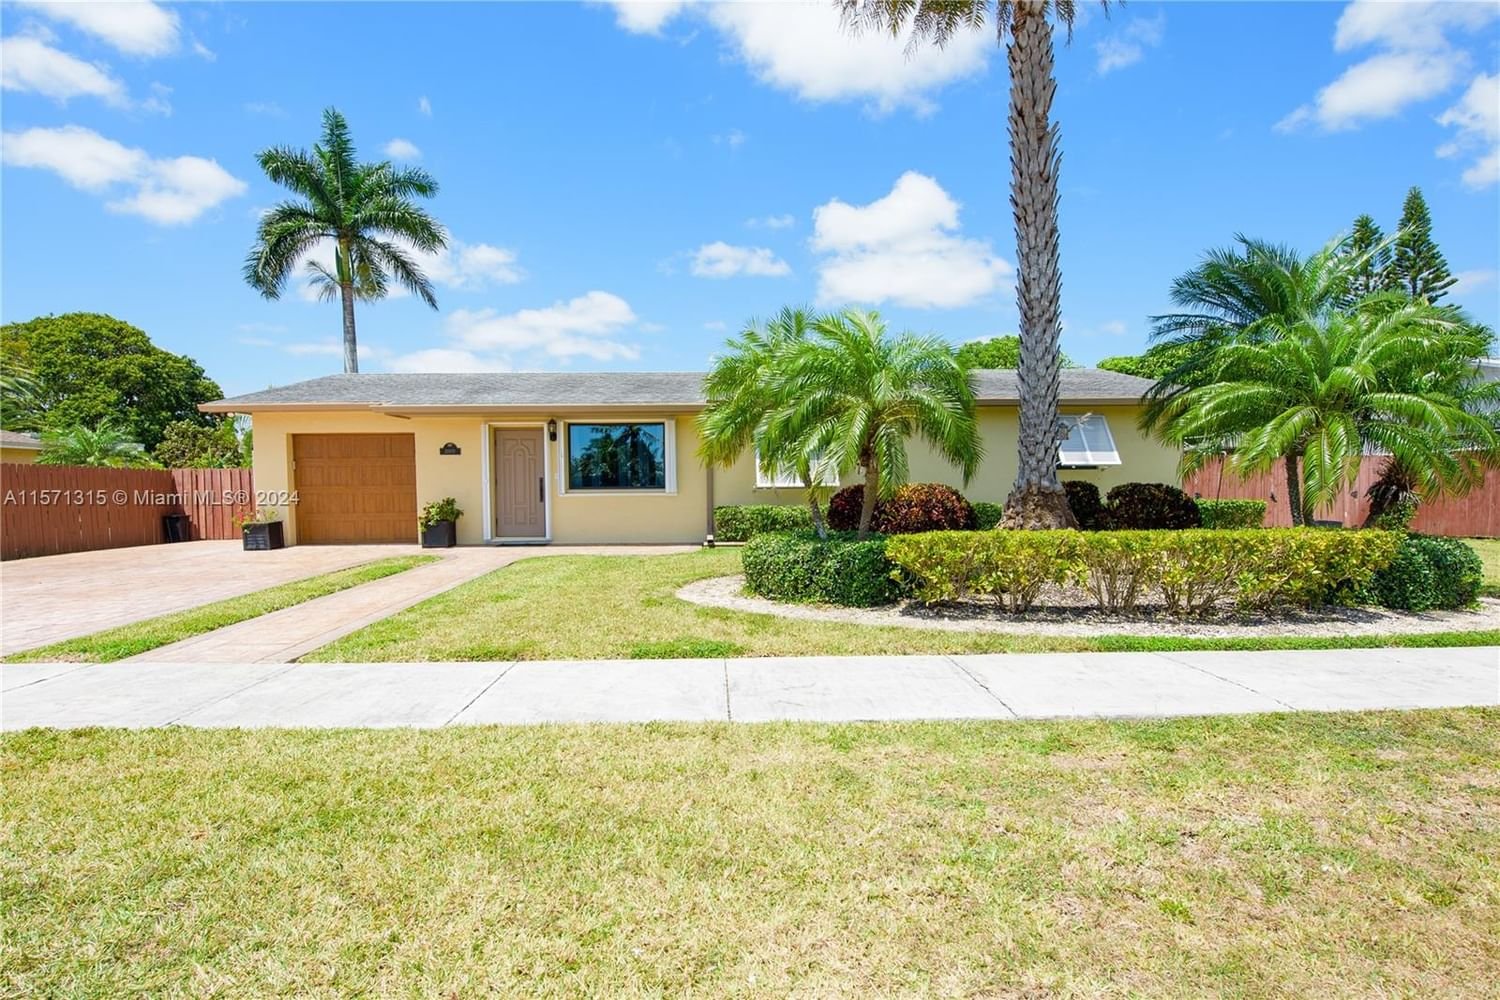 Real estate property located at 30870 190th Ave, Miami-Dade County, VANDA ESTATES, Homestead, FL